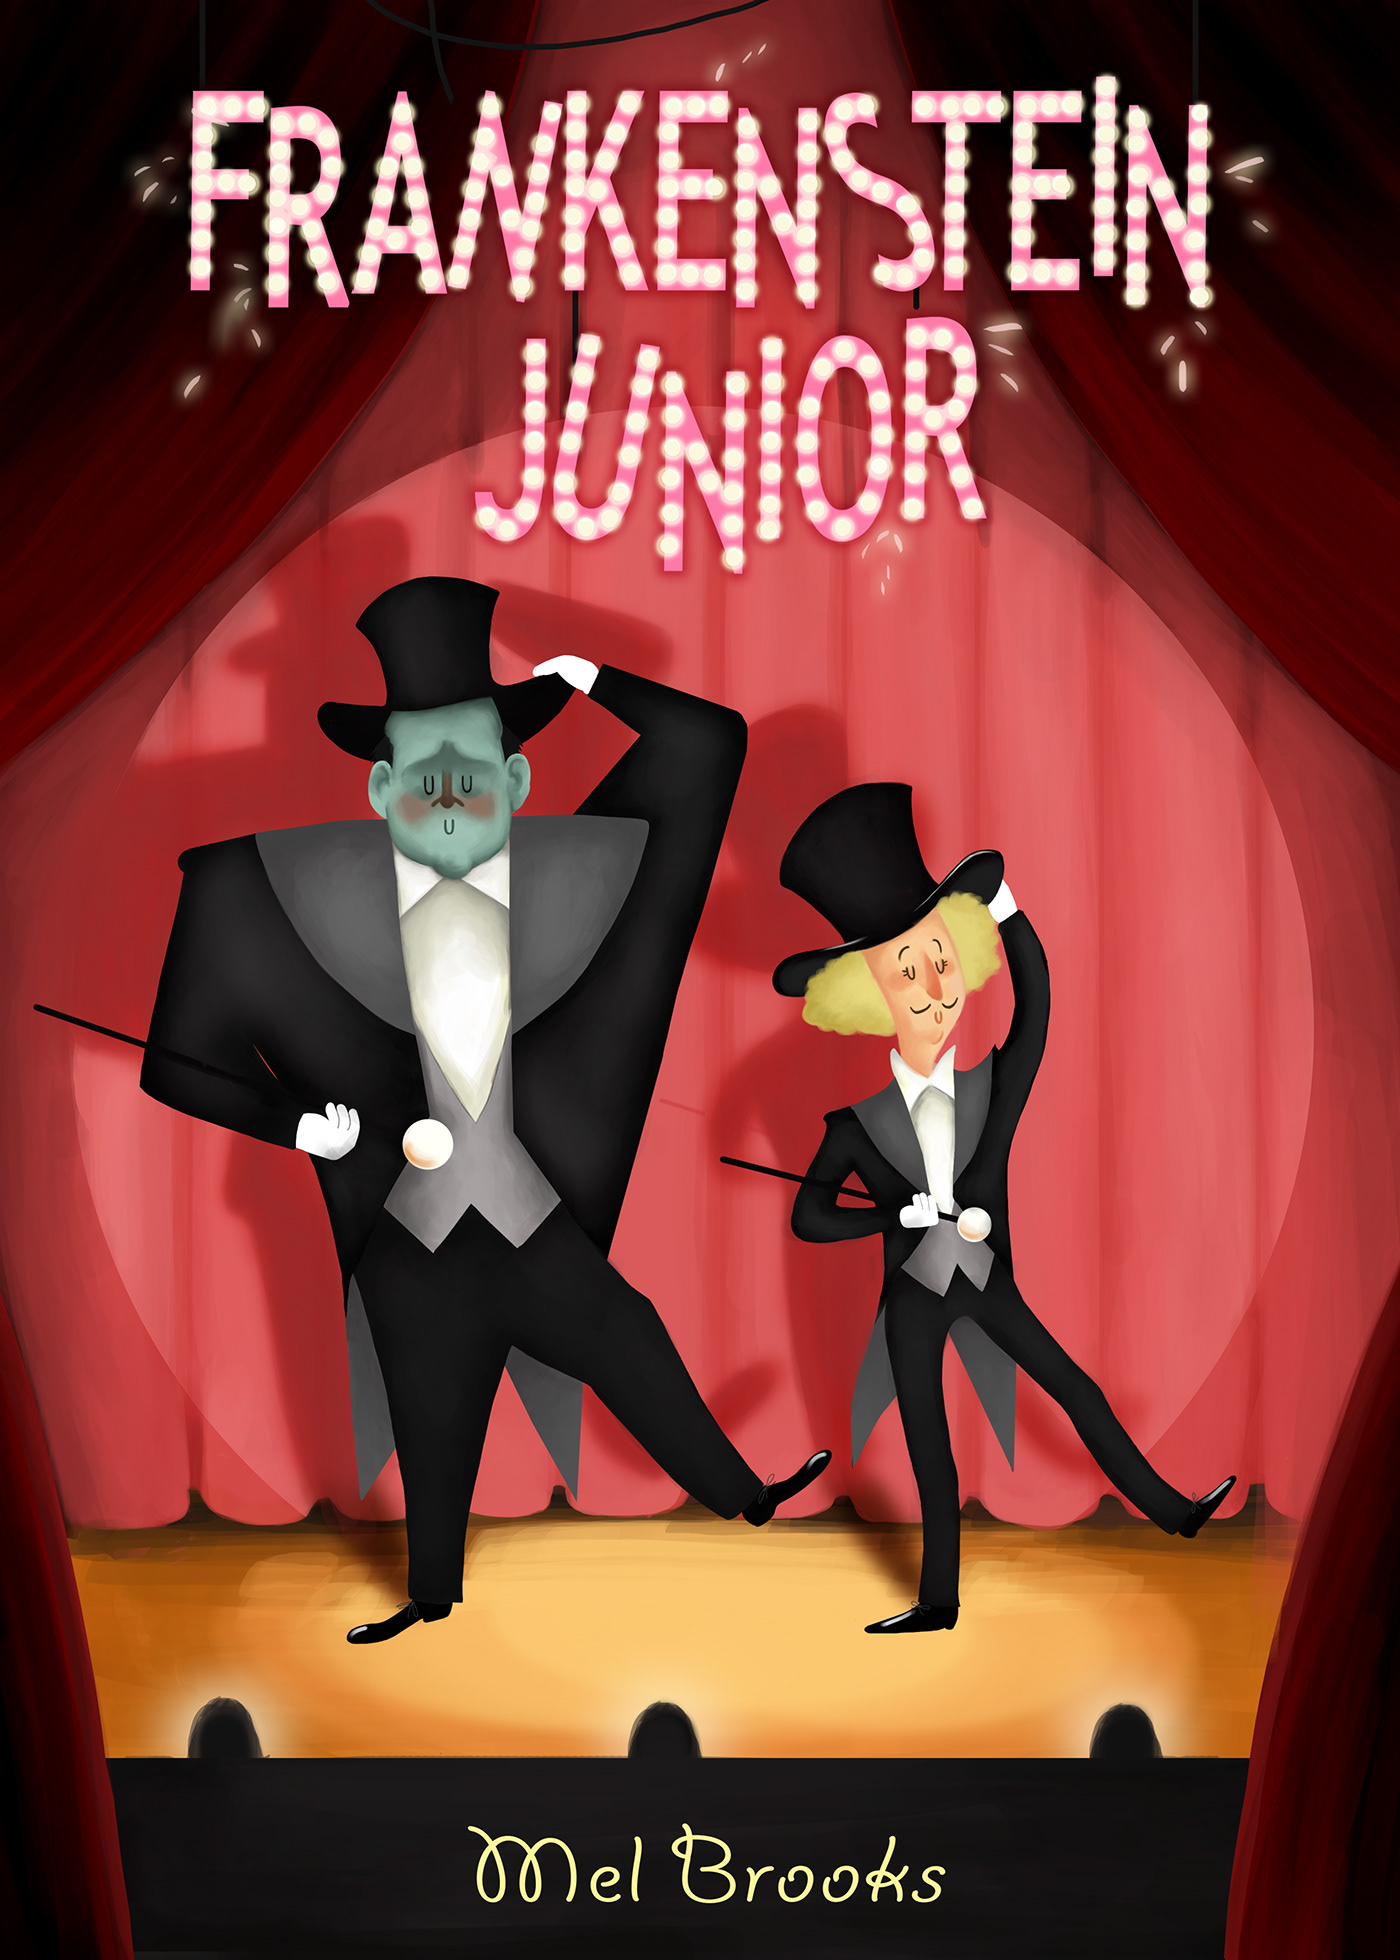 Frankenstein Junior movie poster Film   ILLUSTRATION  photoshop digital illustration